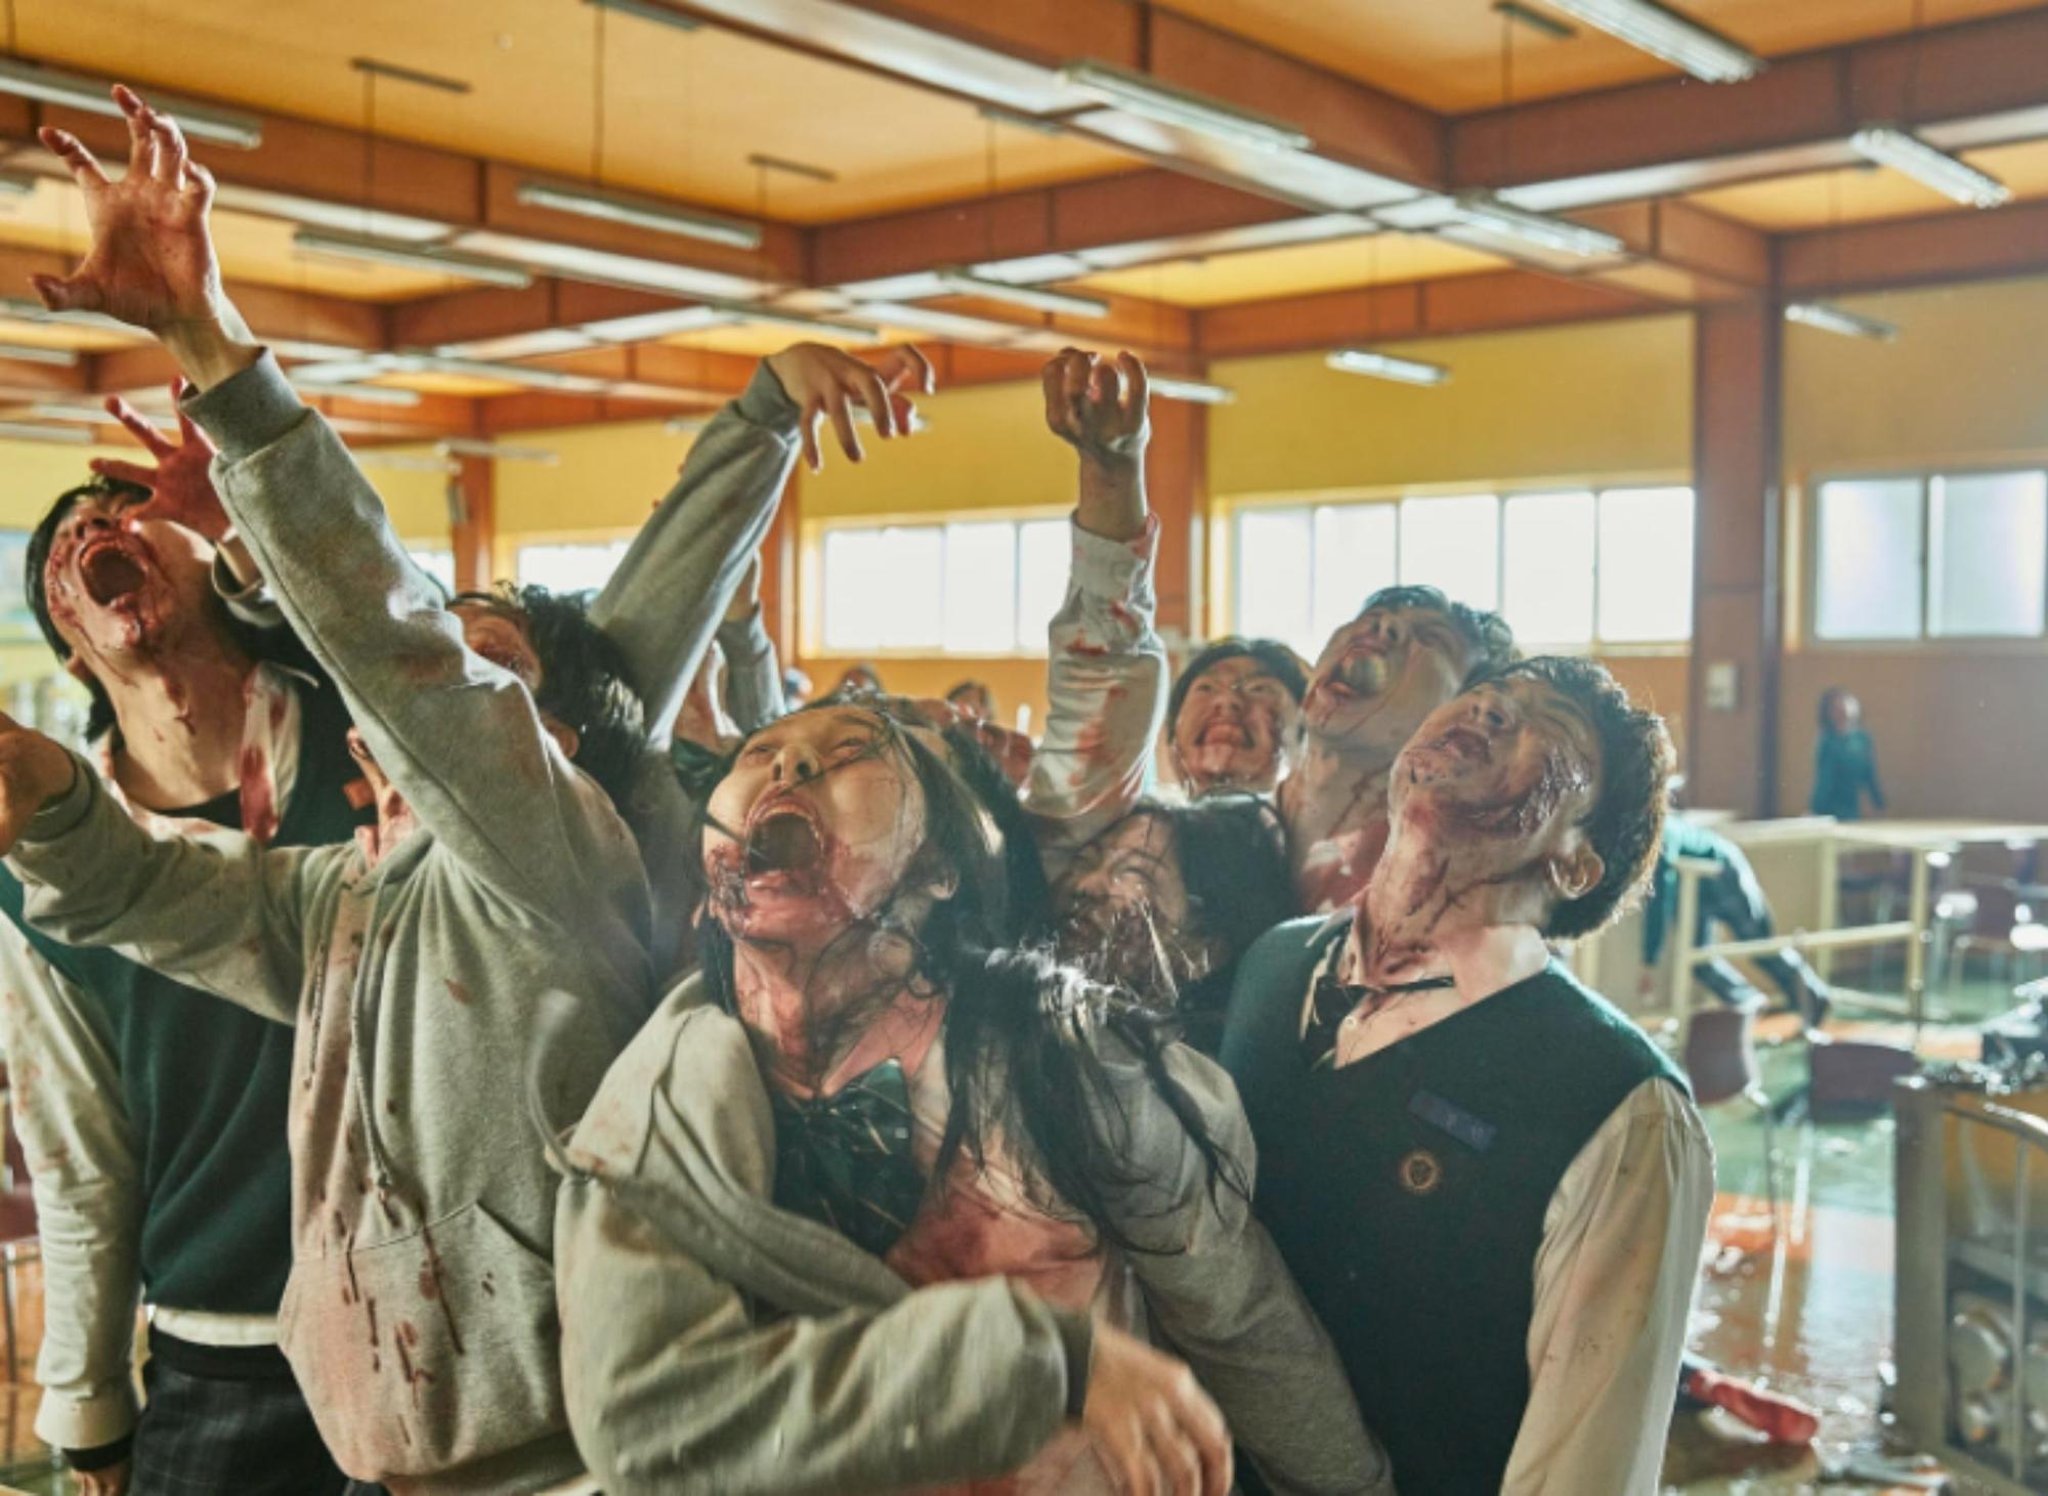 New korean zombie movie